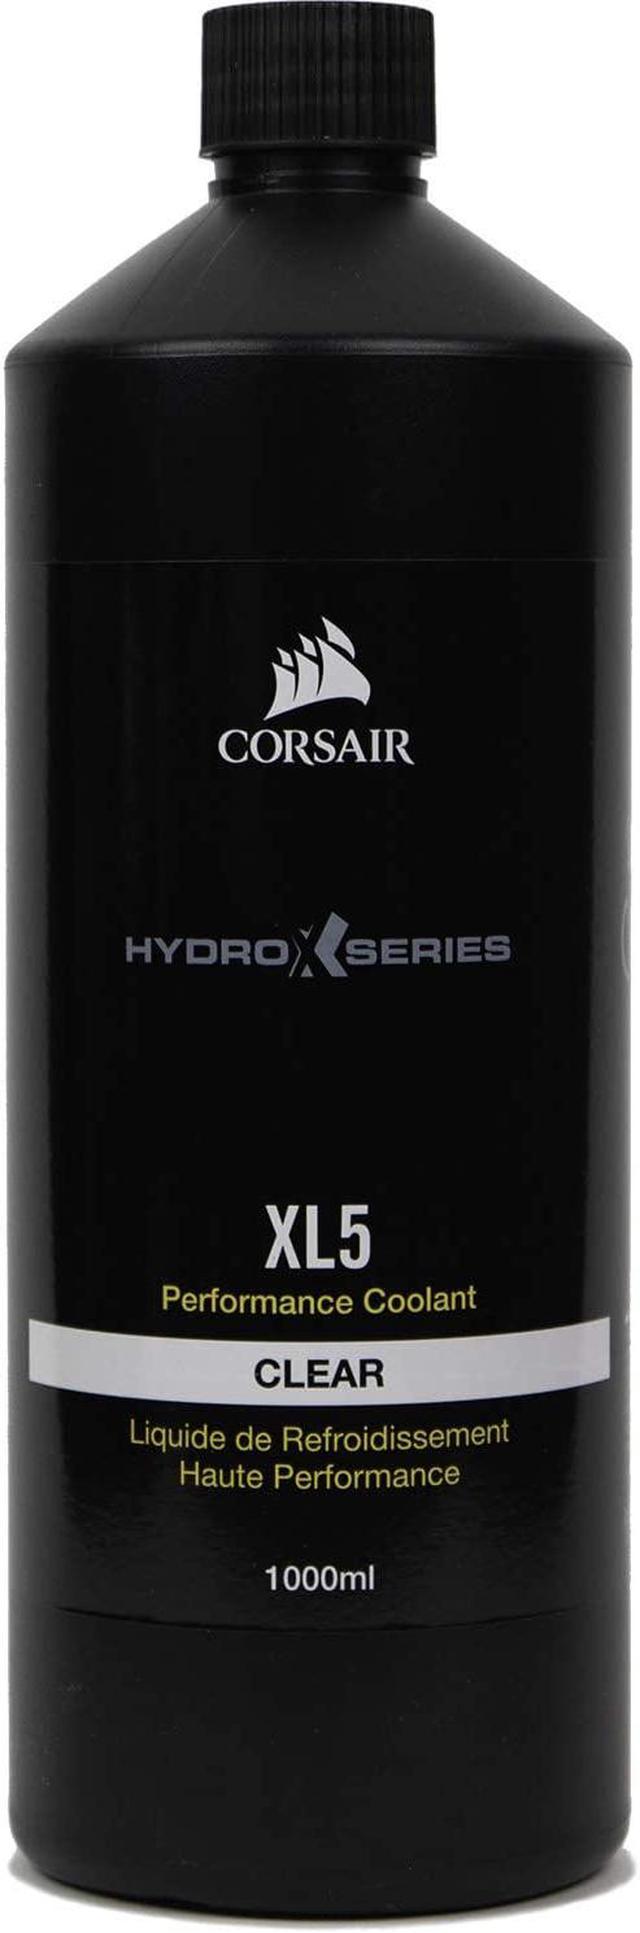 Corsair Hydro X Series XL5 Performance Coolant 1L - Violet